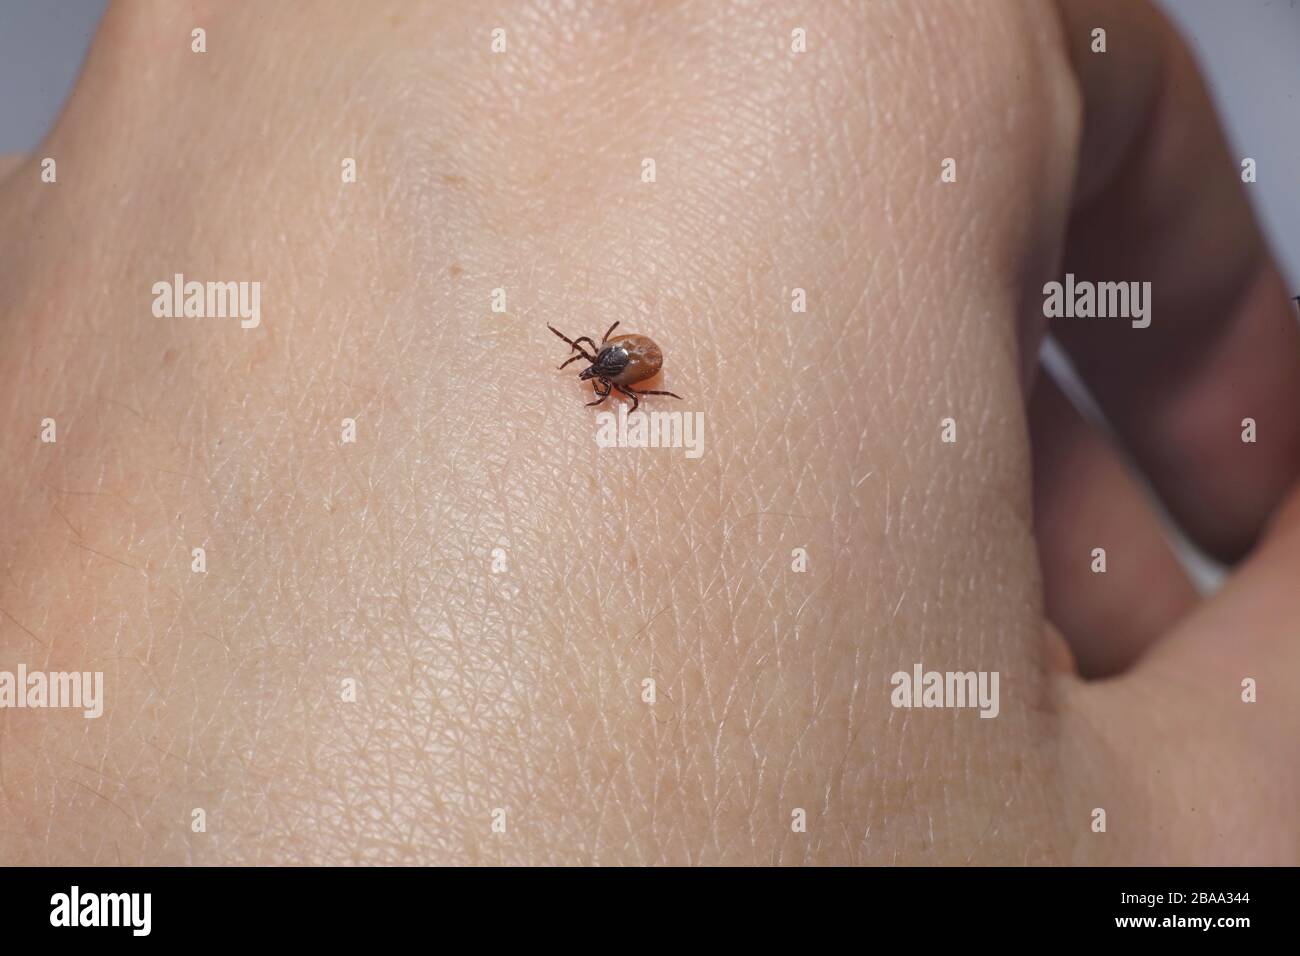 Female tick ( Ixodes scapularis) crawling on skin ready to bite Stock Photo